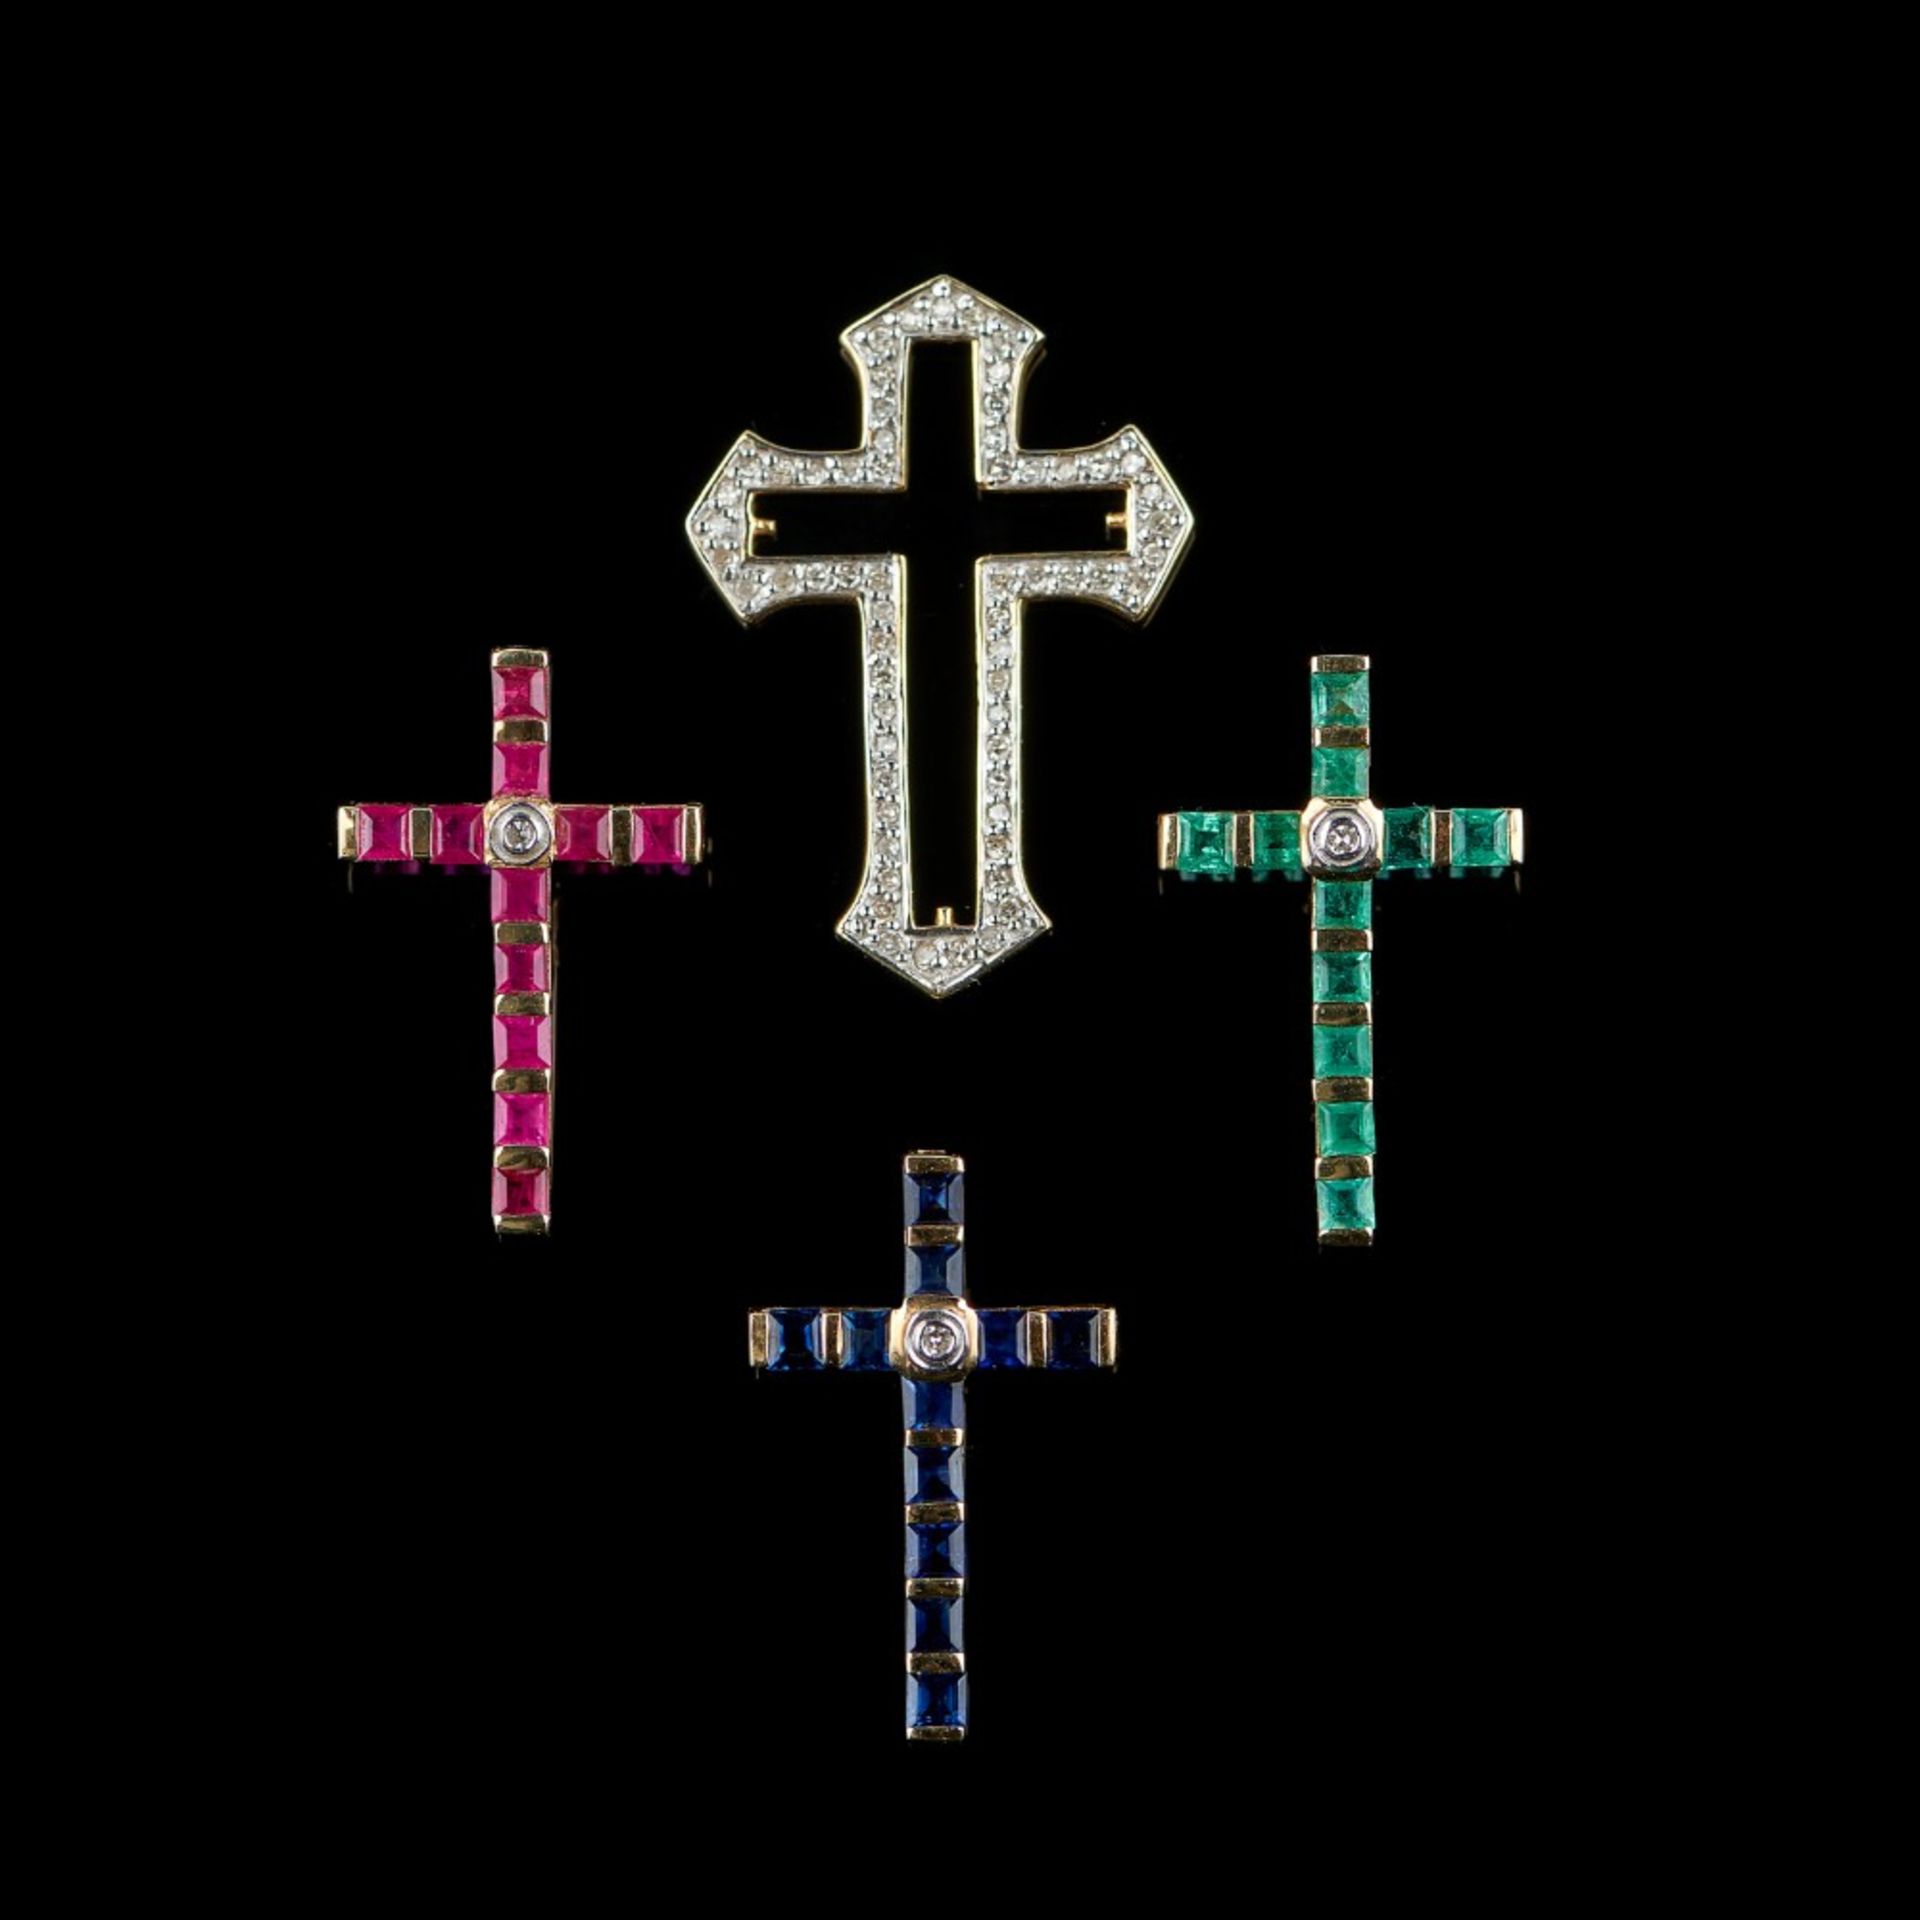  A cross pendant